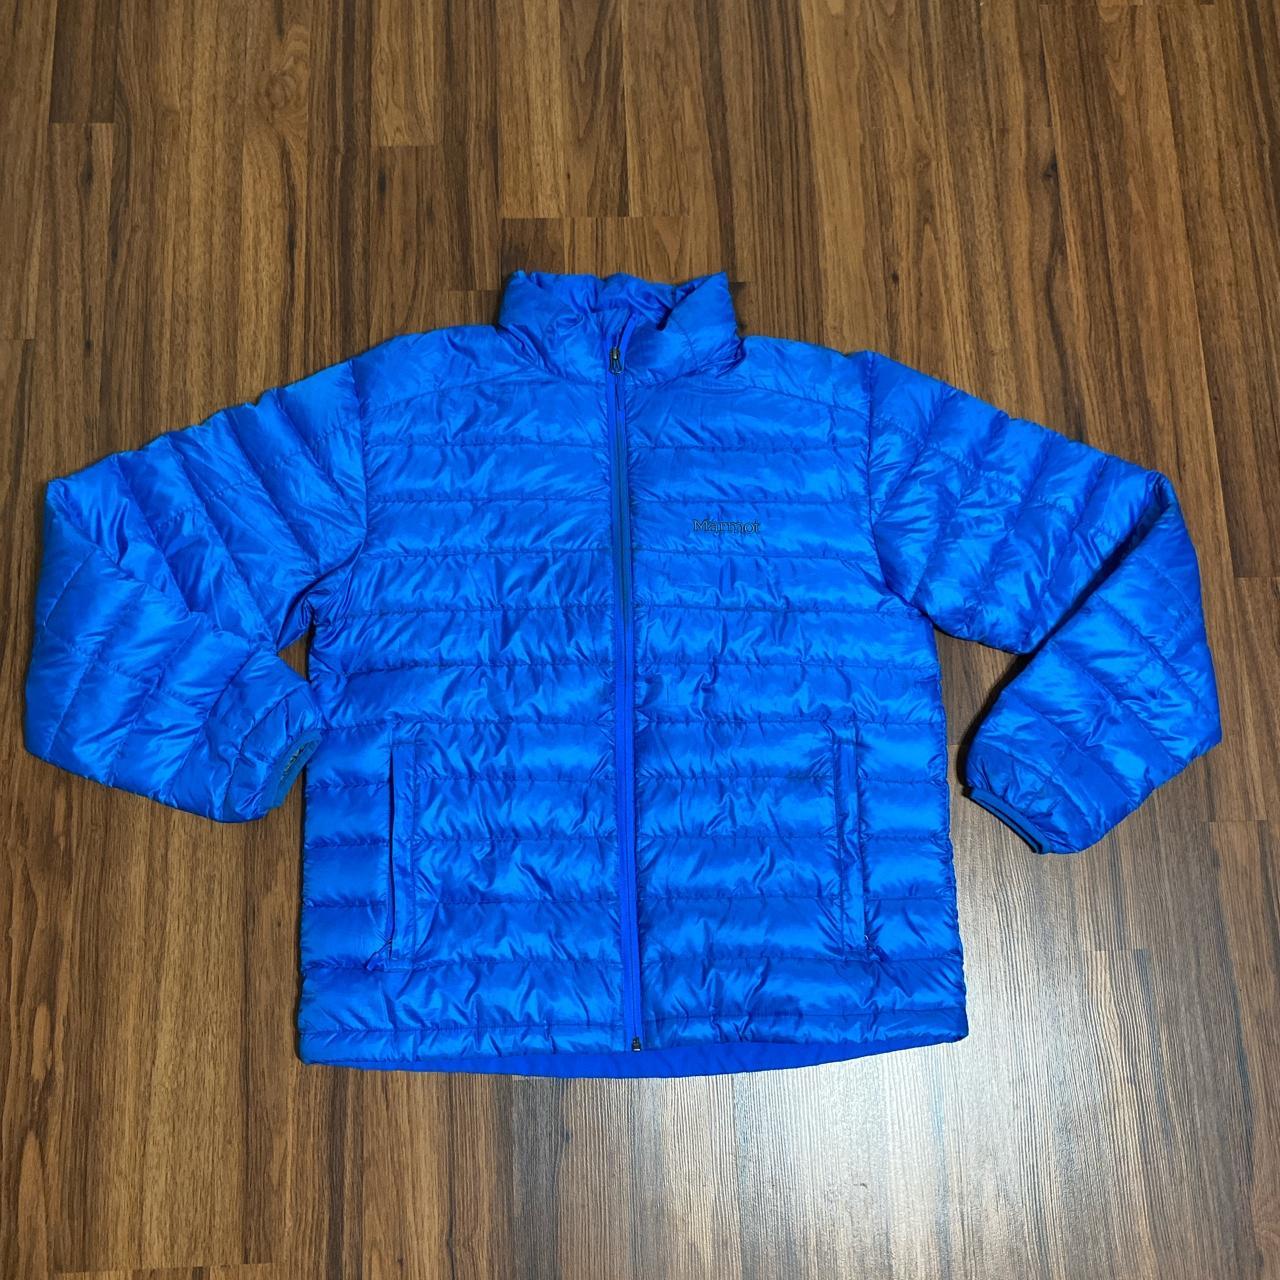 Marmot Blue and Grey Jacket | Depop